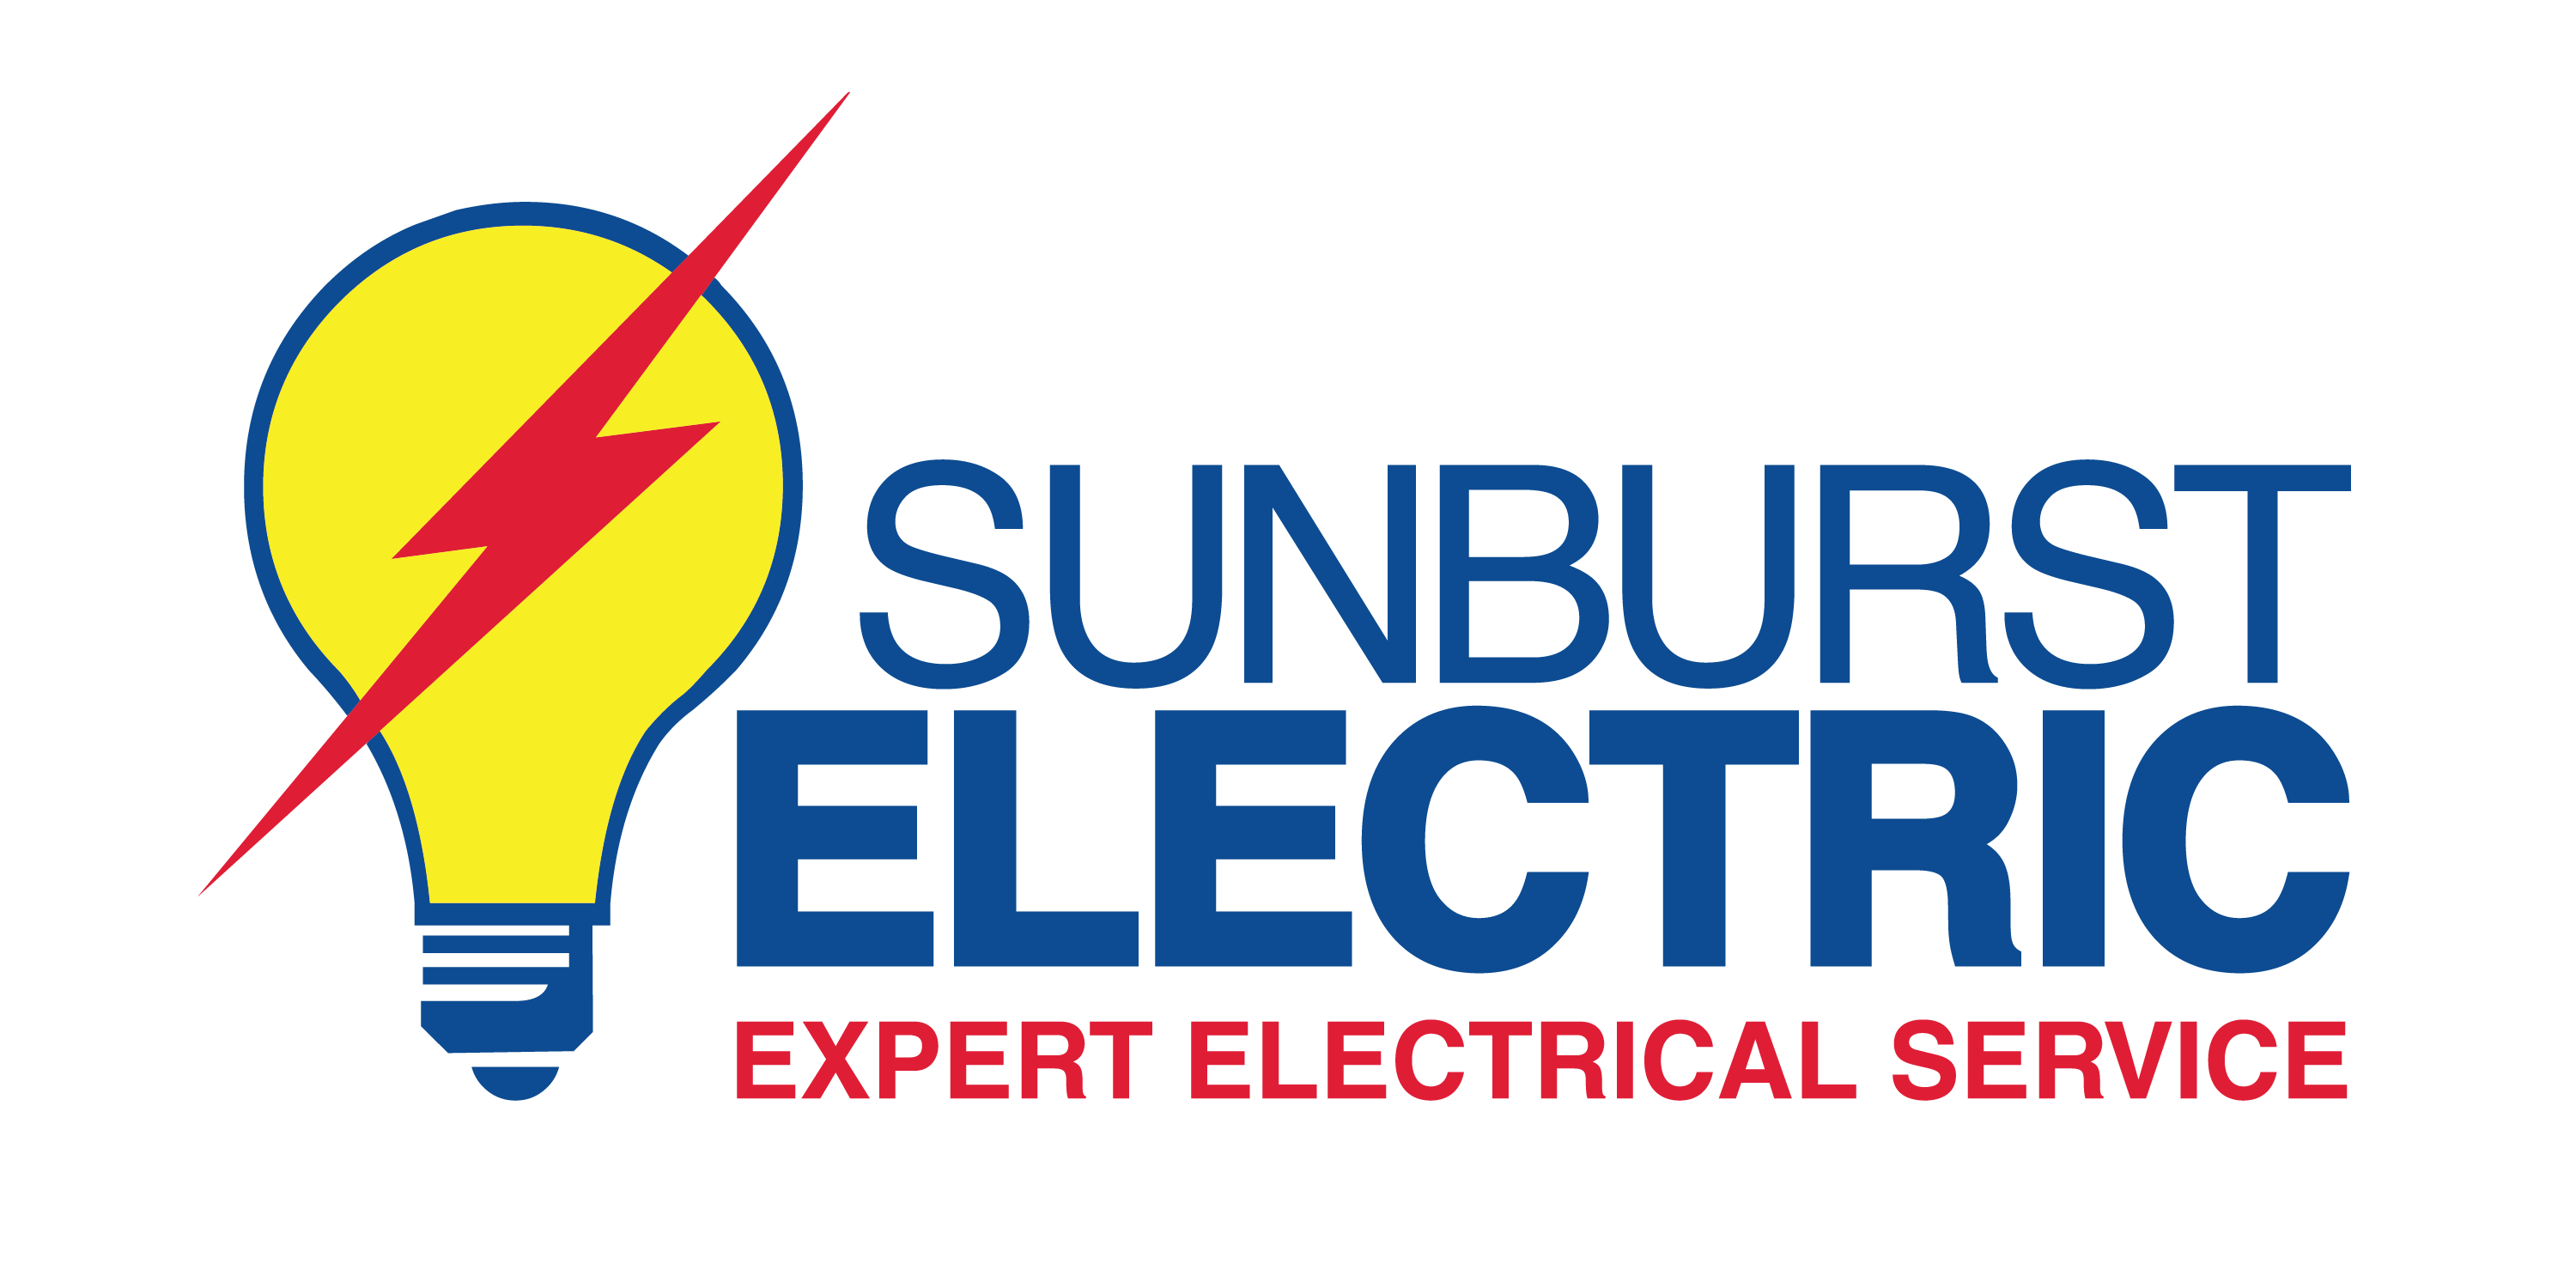 Electrical Service Logo - Sunburst Electric Electricians, Repair and Service, Electronics